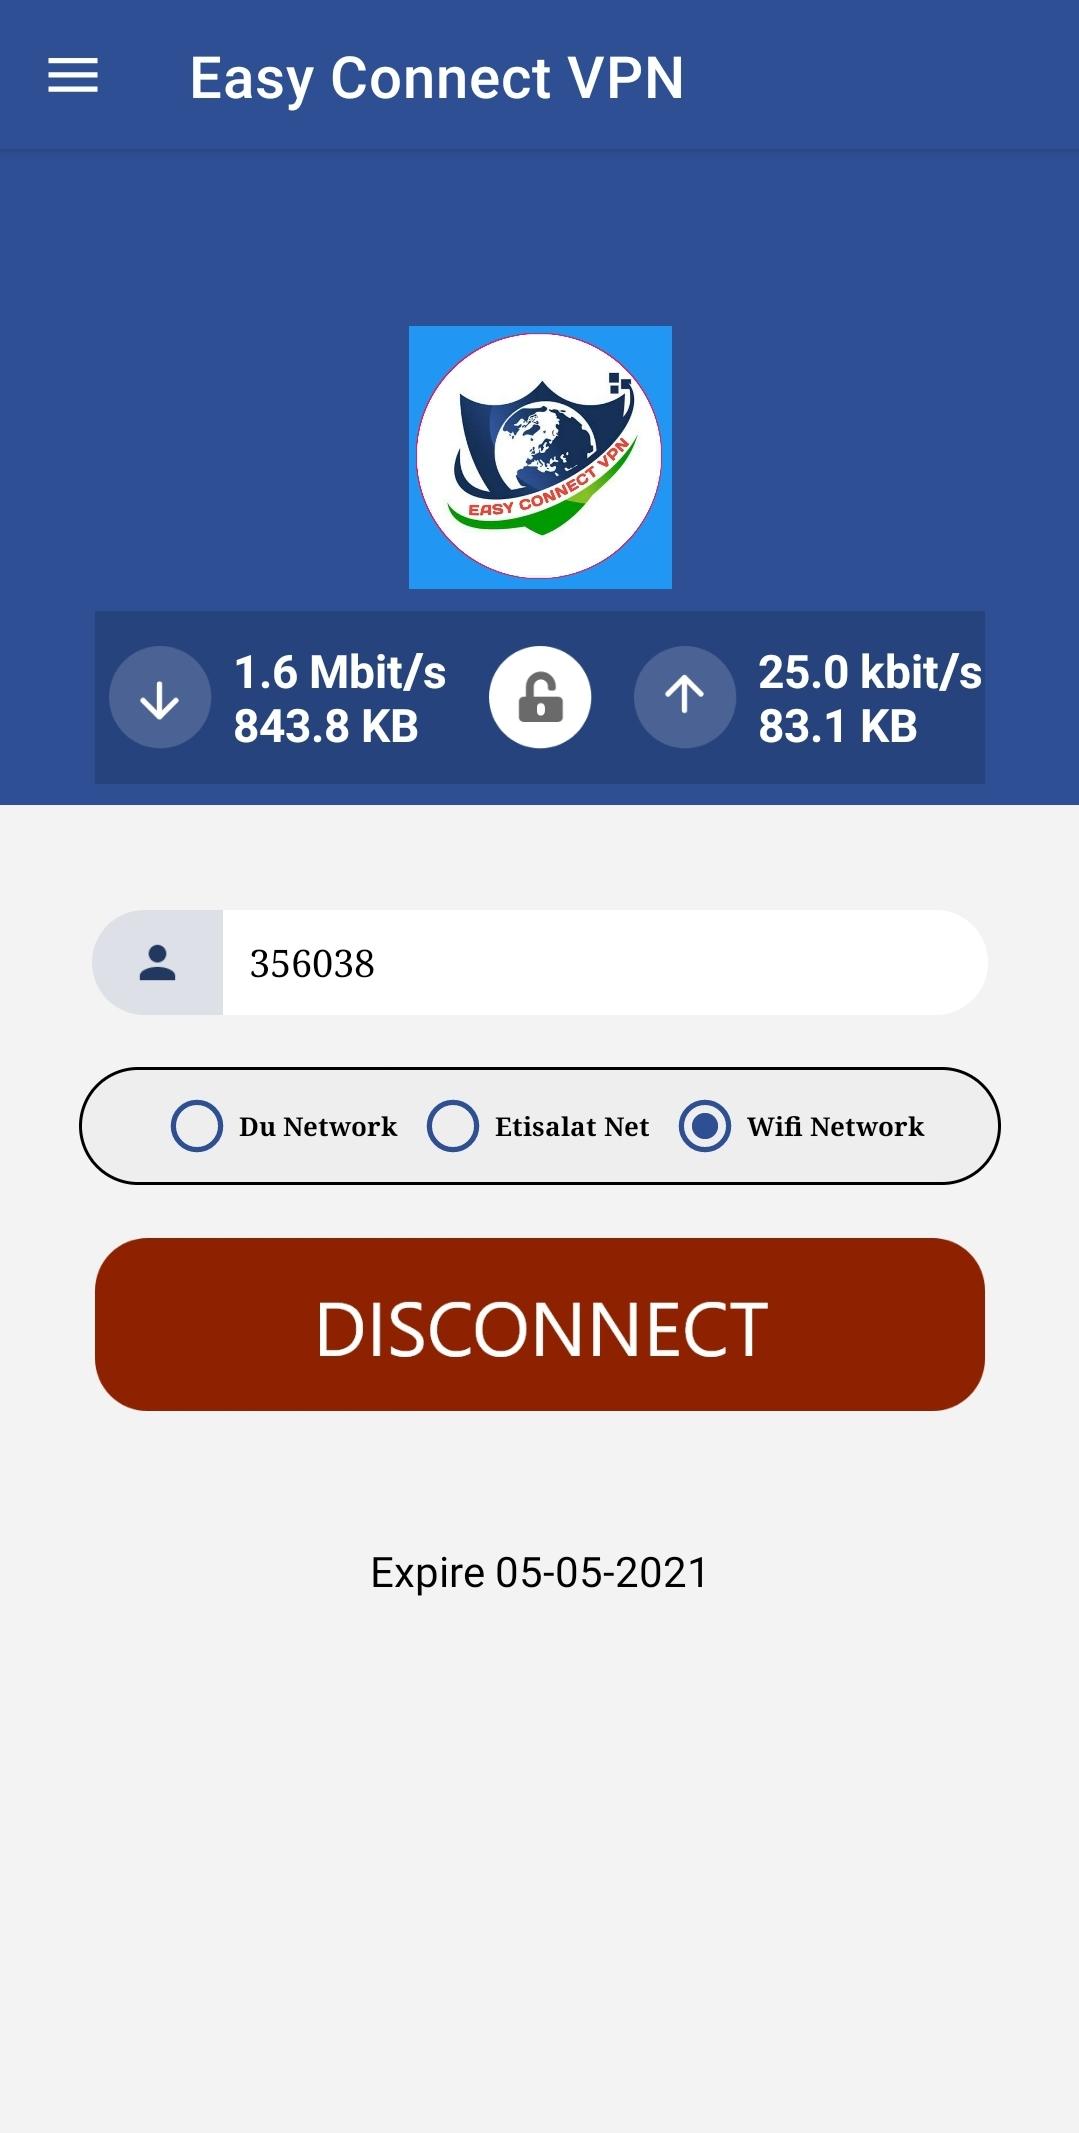 ИЗИ Коннект. Easy connect. Easy connect Utility. In connect VPN.